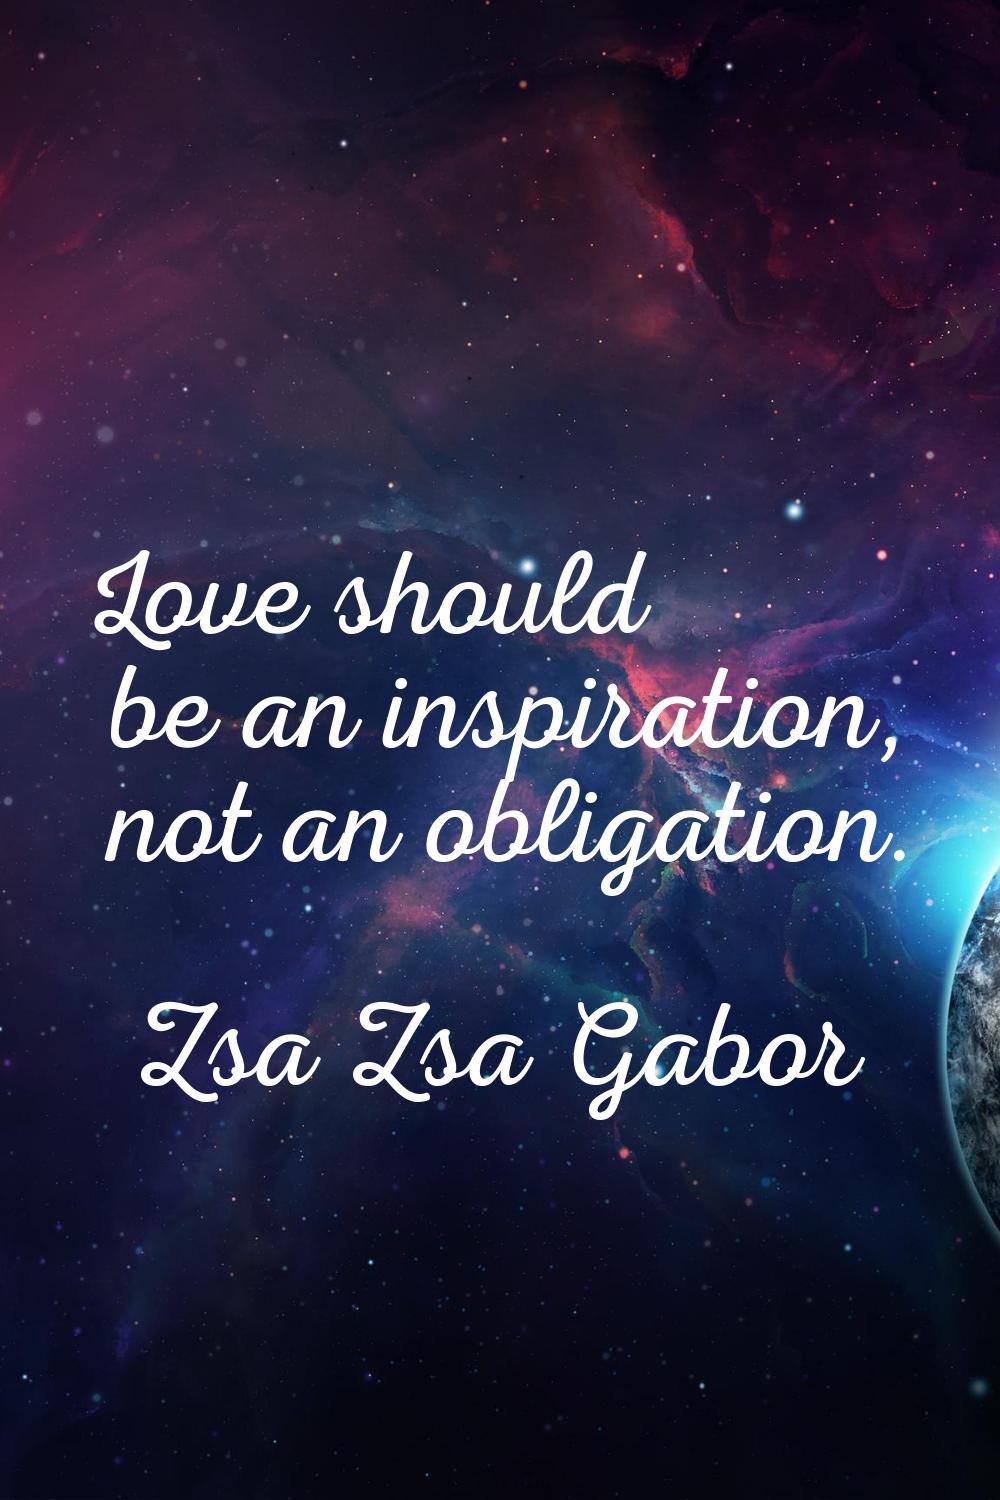 Love should be an inspiration, not an obligation.